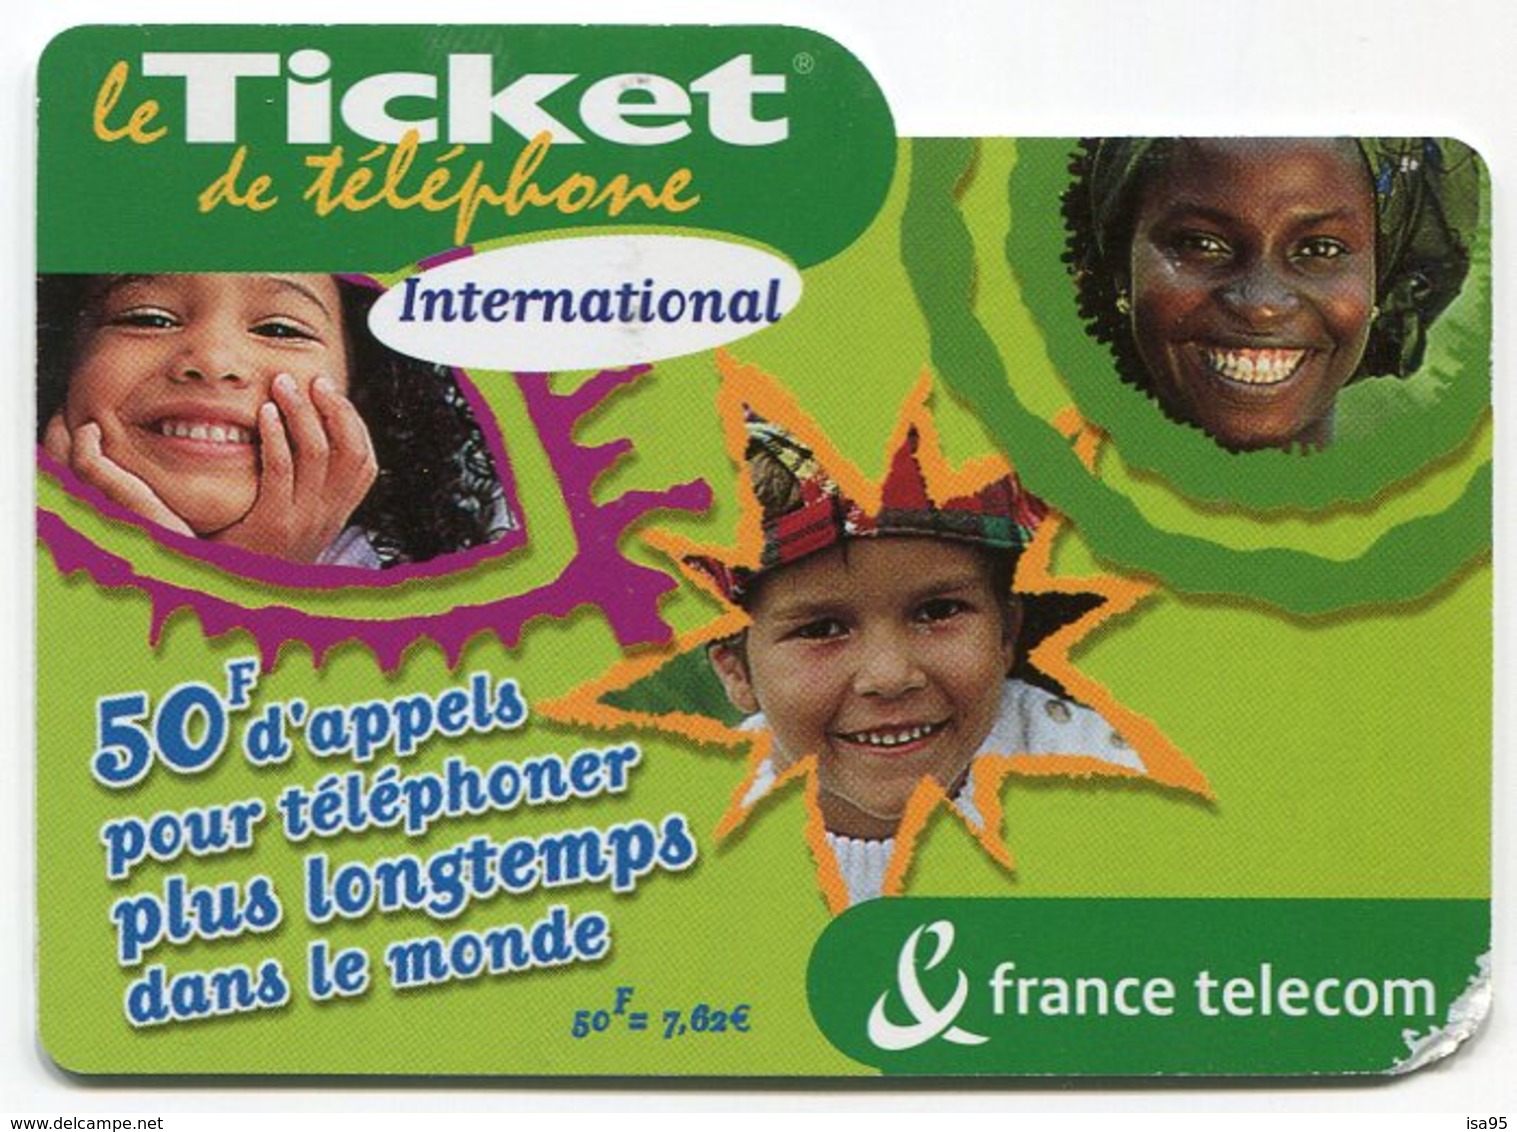 TELECARTE-LE TICKET DE TELEPHONE INTERNATIONAL-2003-50F - FT Tickets